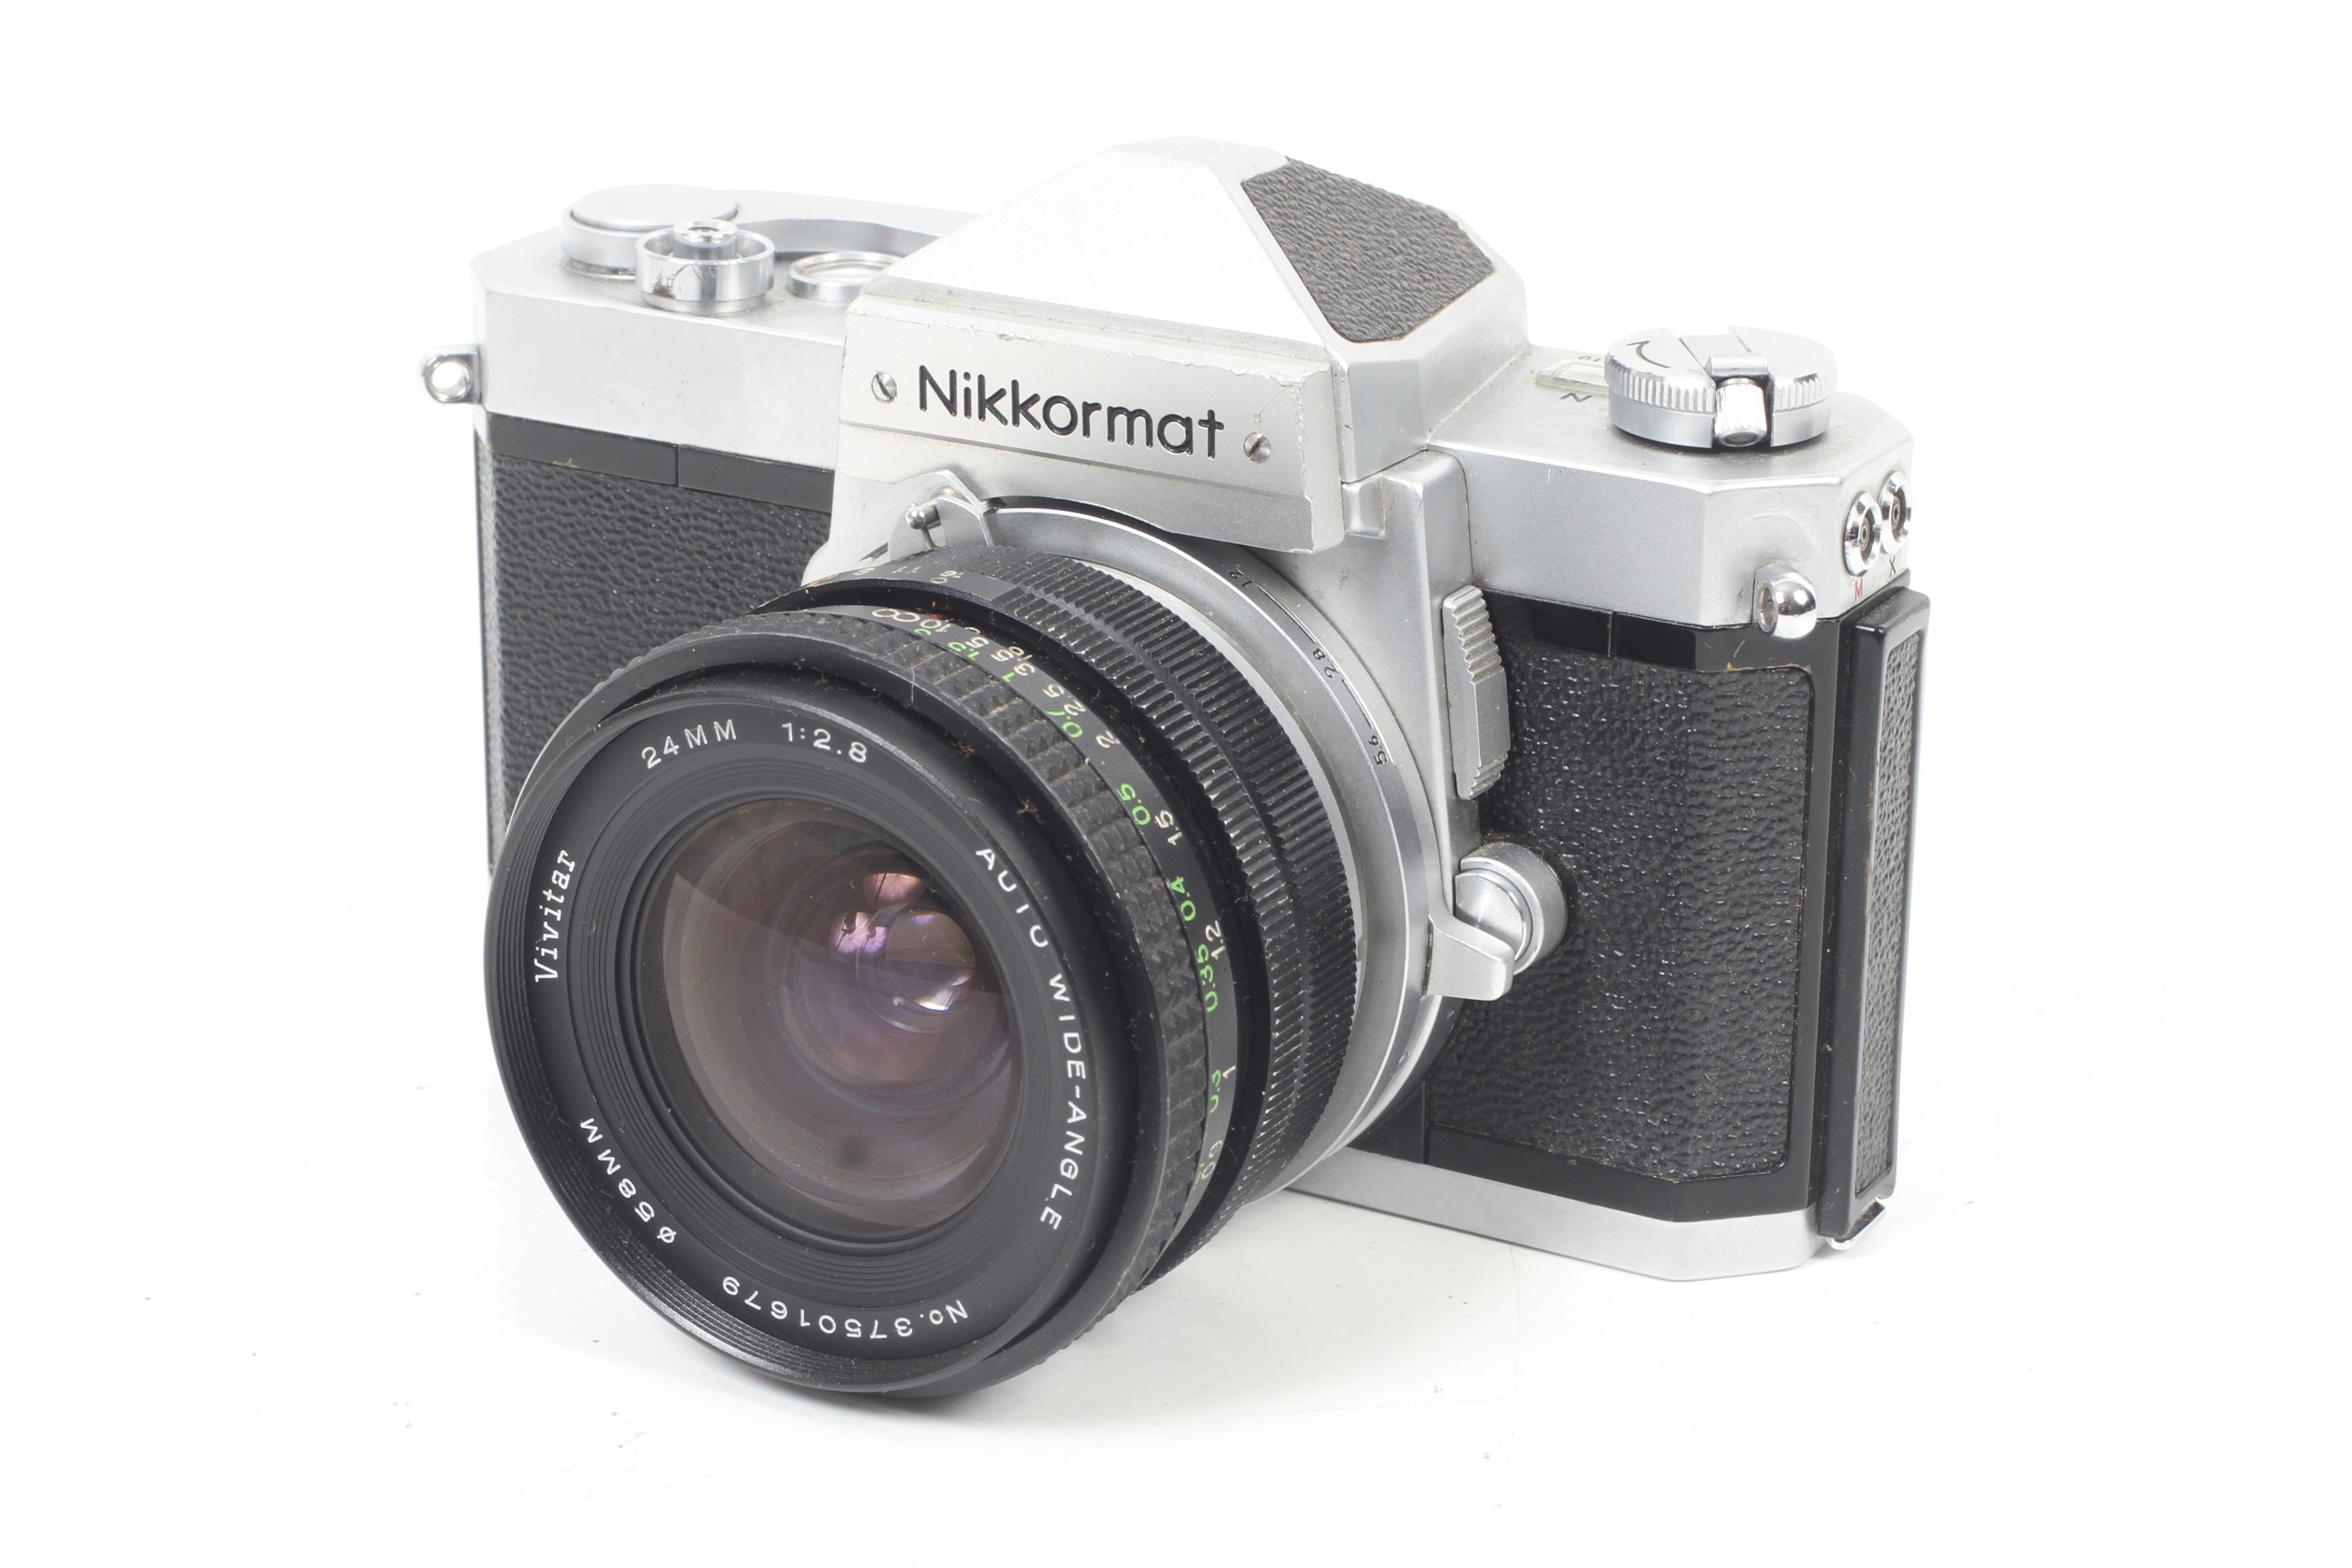 A Nikon Nikkormat FT-N 35mm SLR camera. Chrome. Serial No. FT 4189810. With a Vivitar 24mm f2.